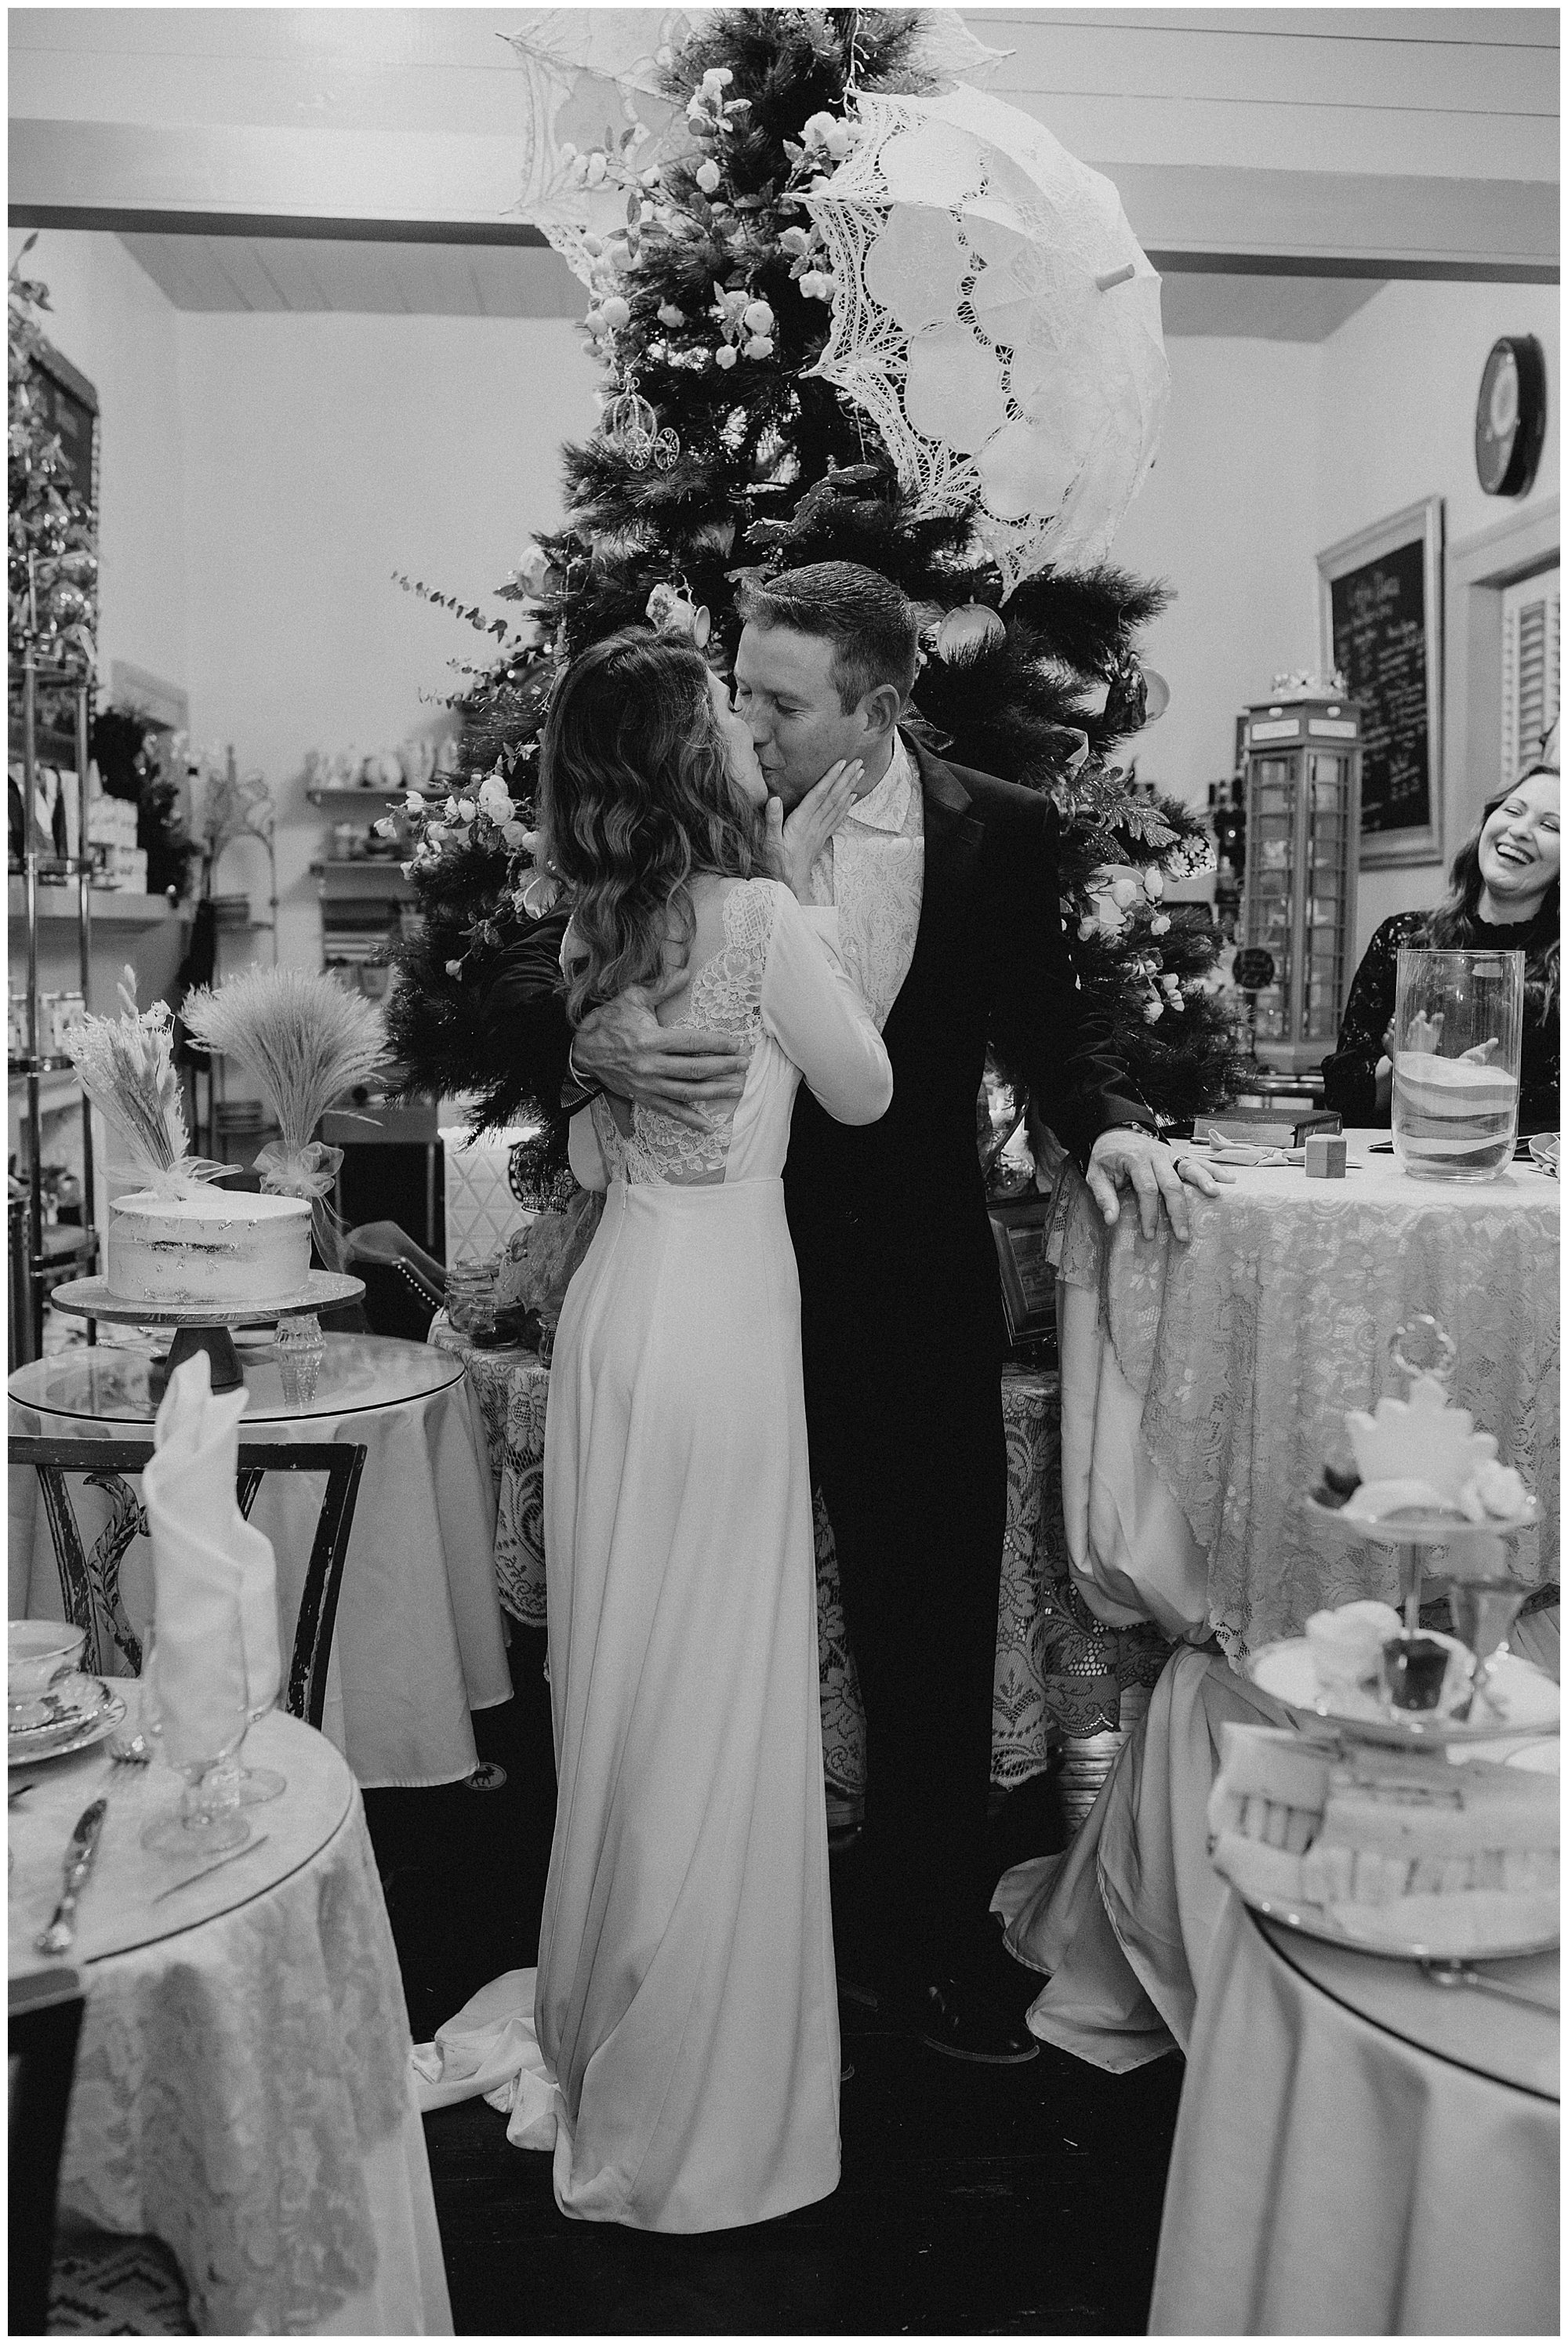 The Ginger room, Vow renewal, Vow renewal with family, Alpharetta, Alpharetta Photographer,  Atlanta Wedding/ Engagement Photographer 